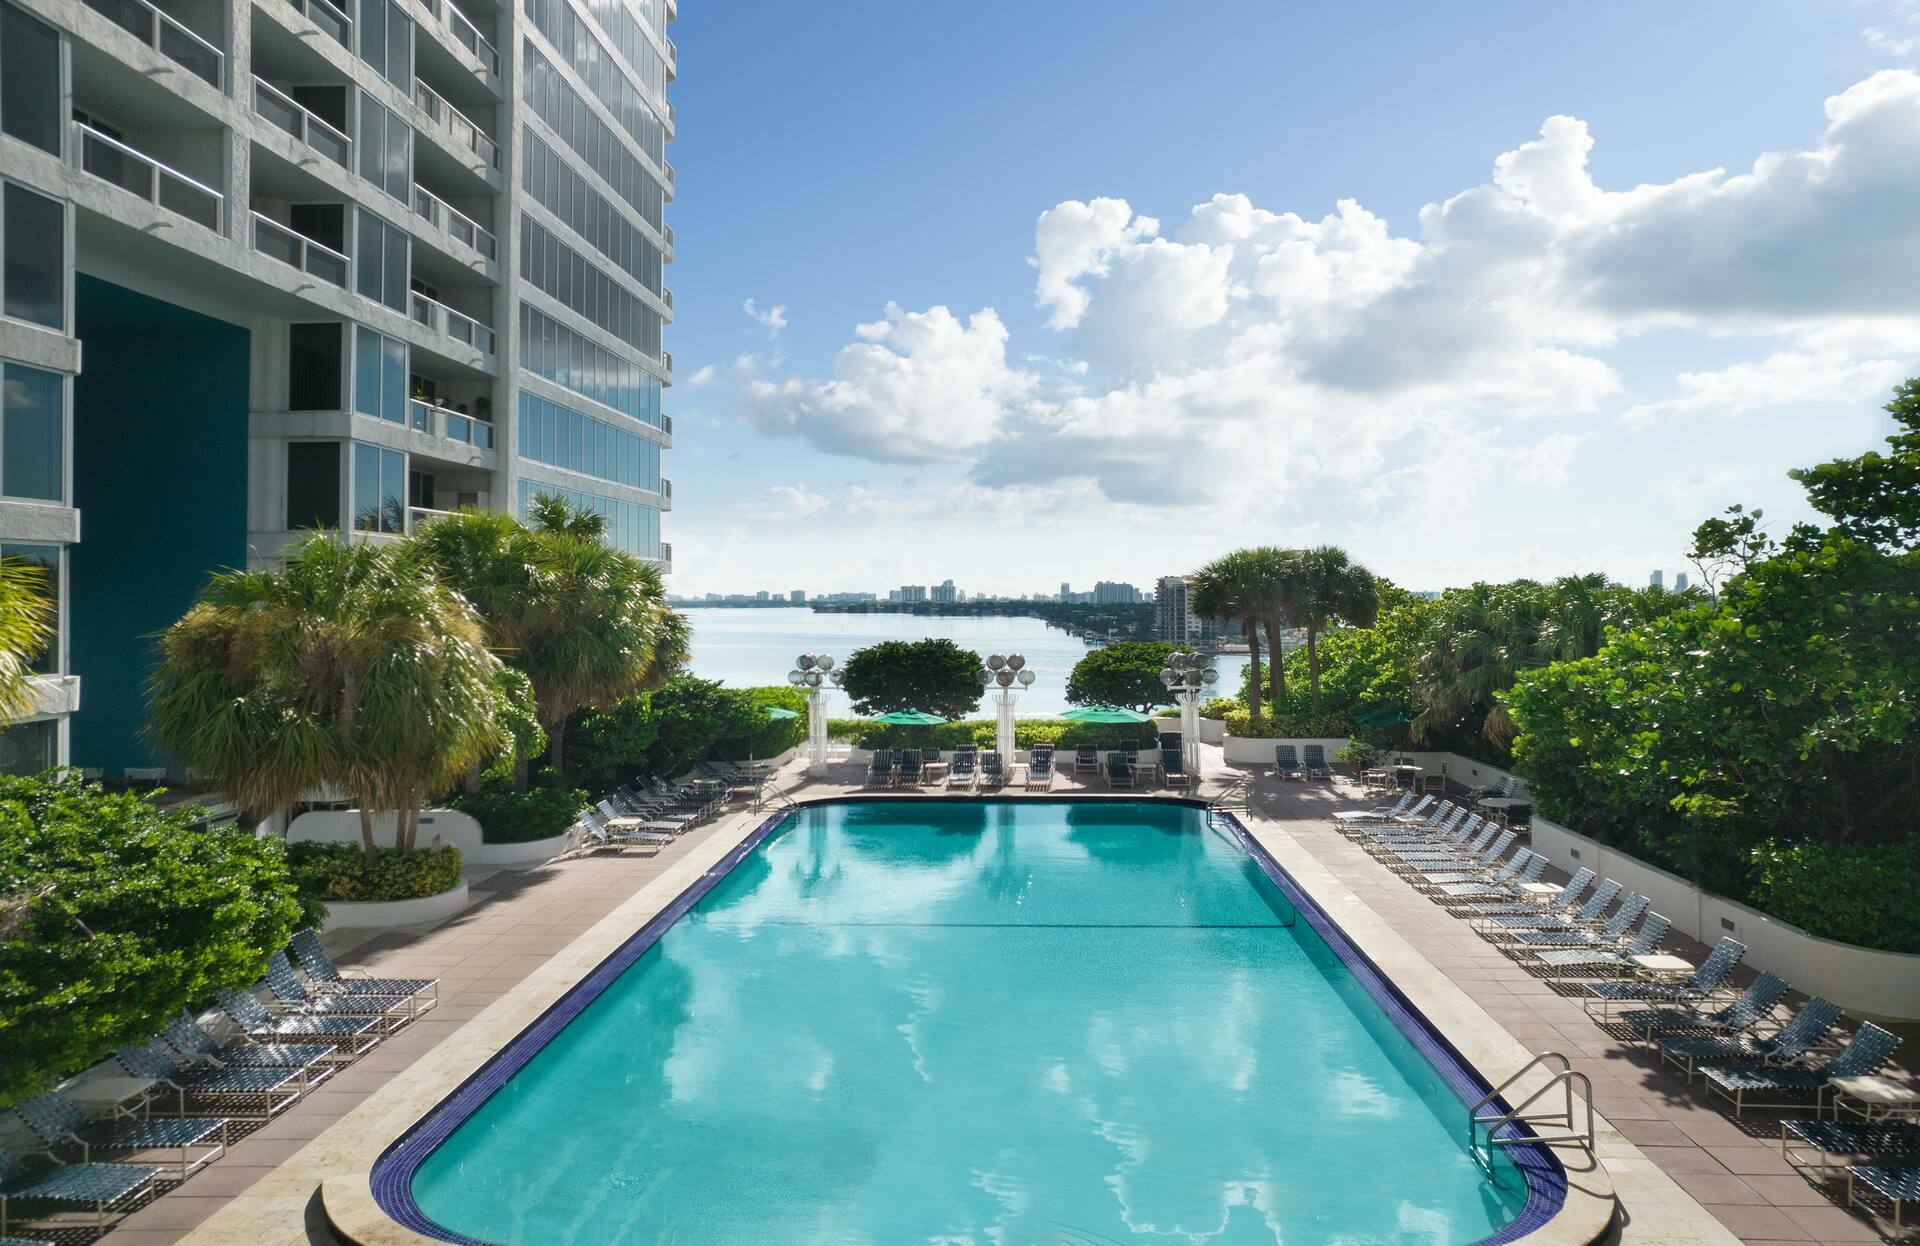 Photo of DoubleTree by Hilton Grand Hotel Biscayne Bay, Miami, FL